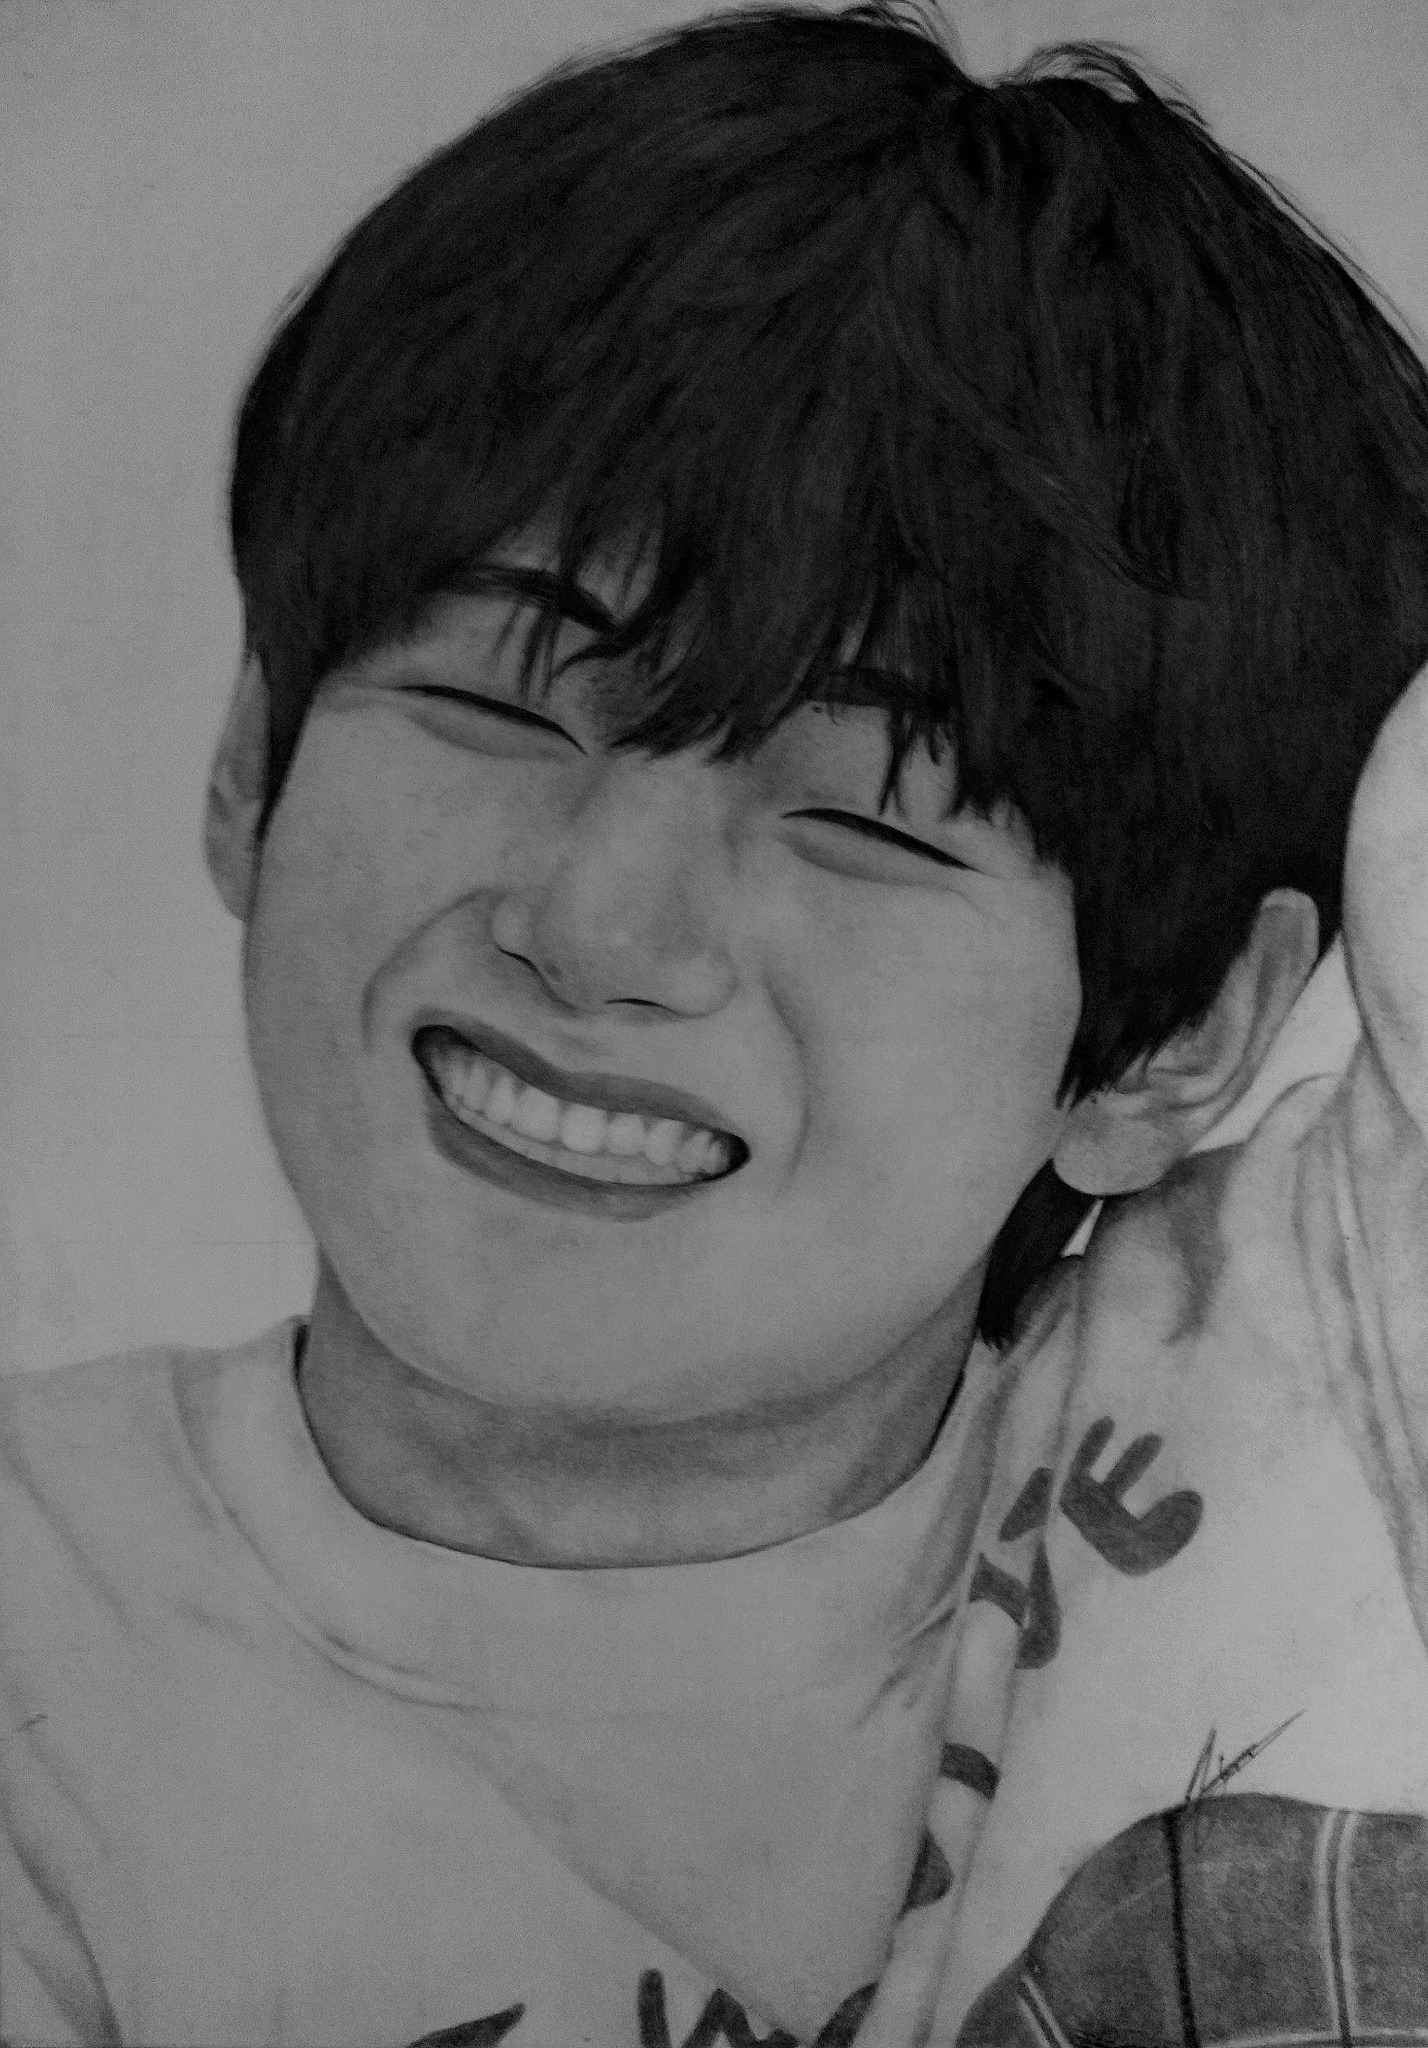 Artistic Piece - Kim Taehyung's portrait sketch